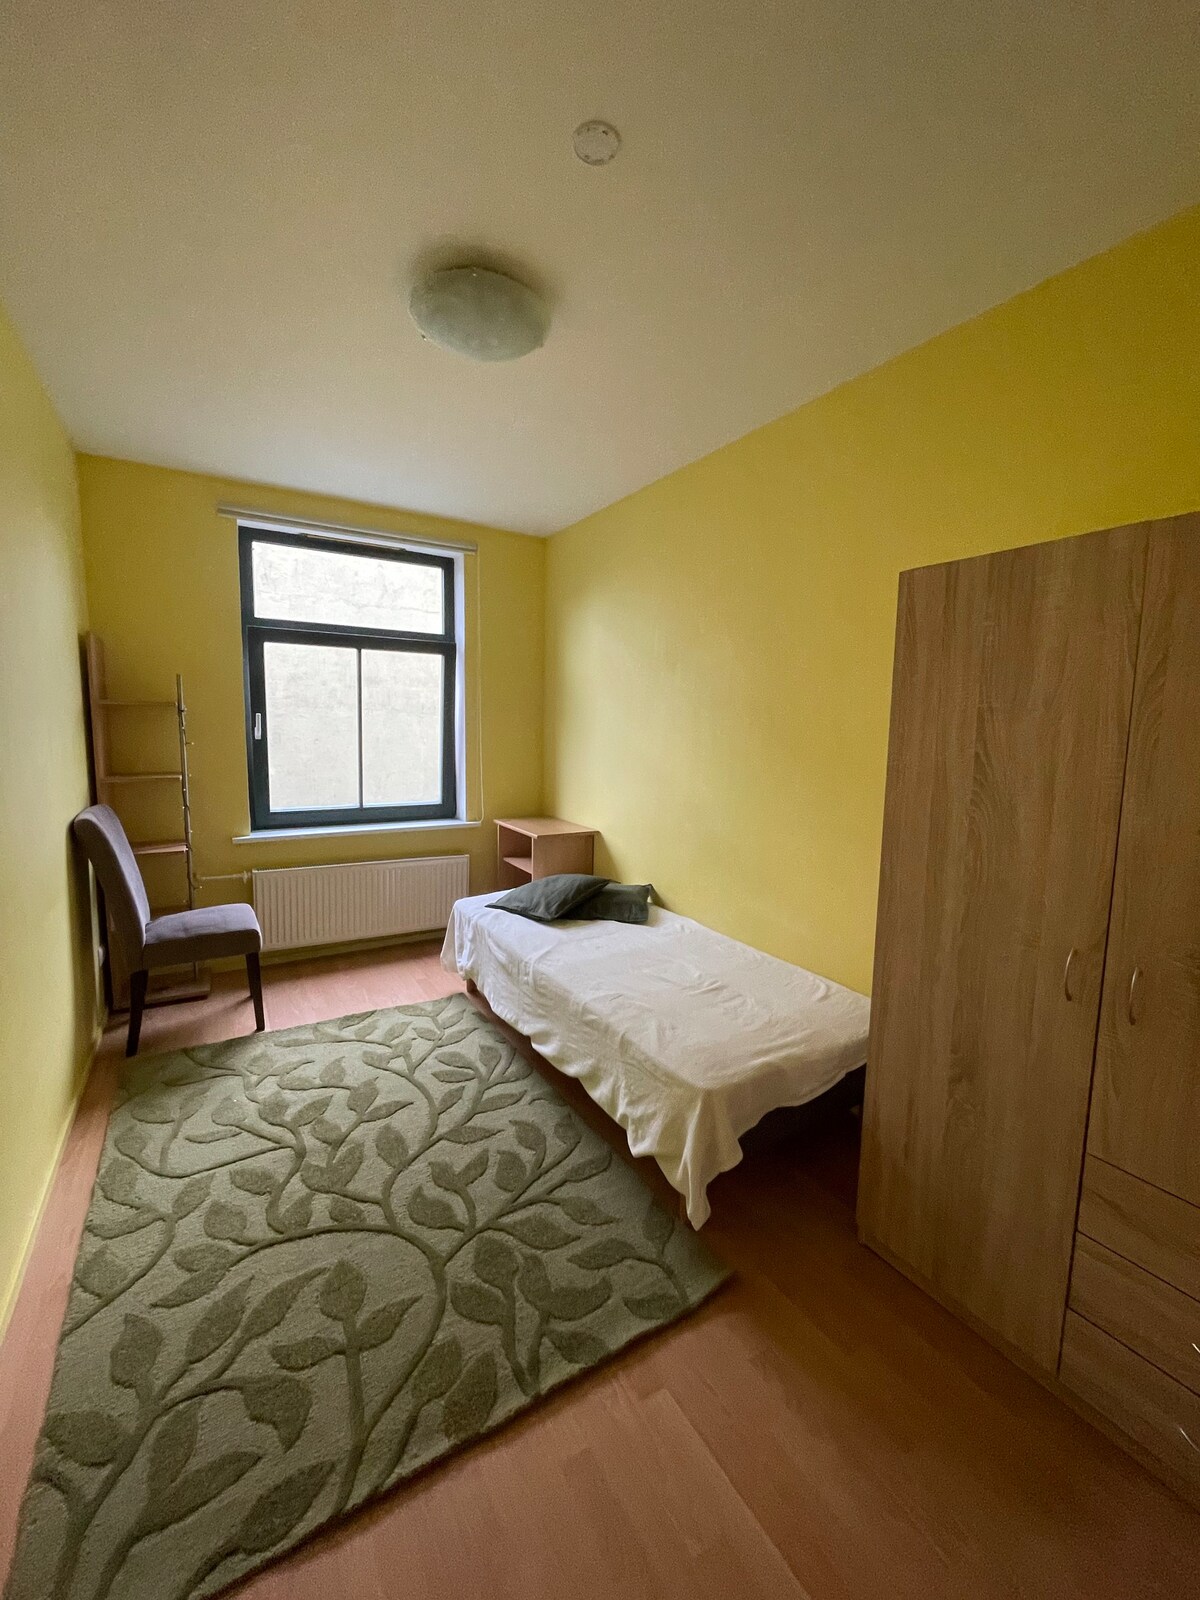 2 bedroom apartment in Kadriorg